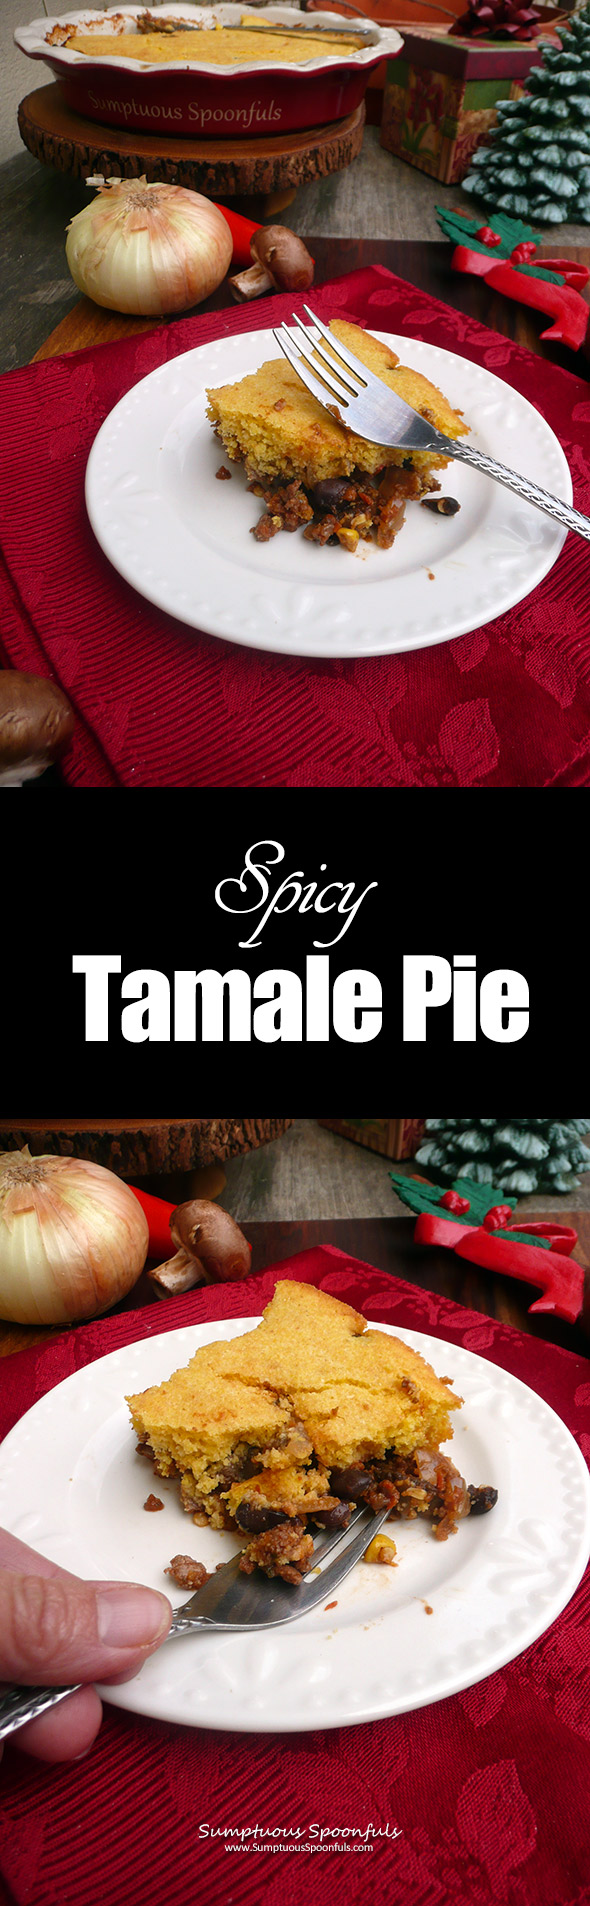 Spicy Tamale Pie ~ Sumptuous Spoonfuls #texmex #casserole #recipe